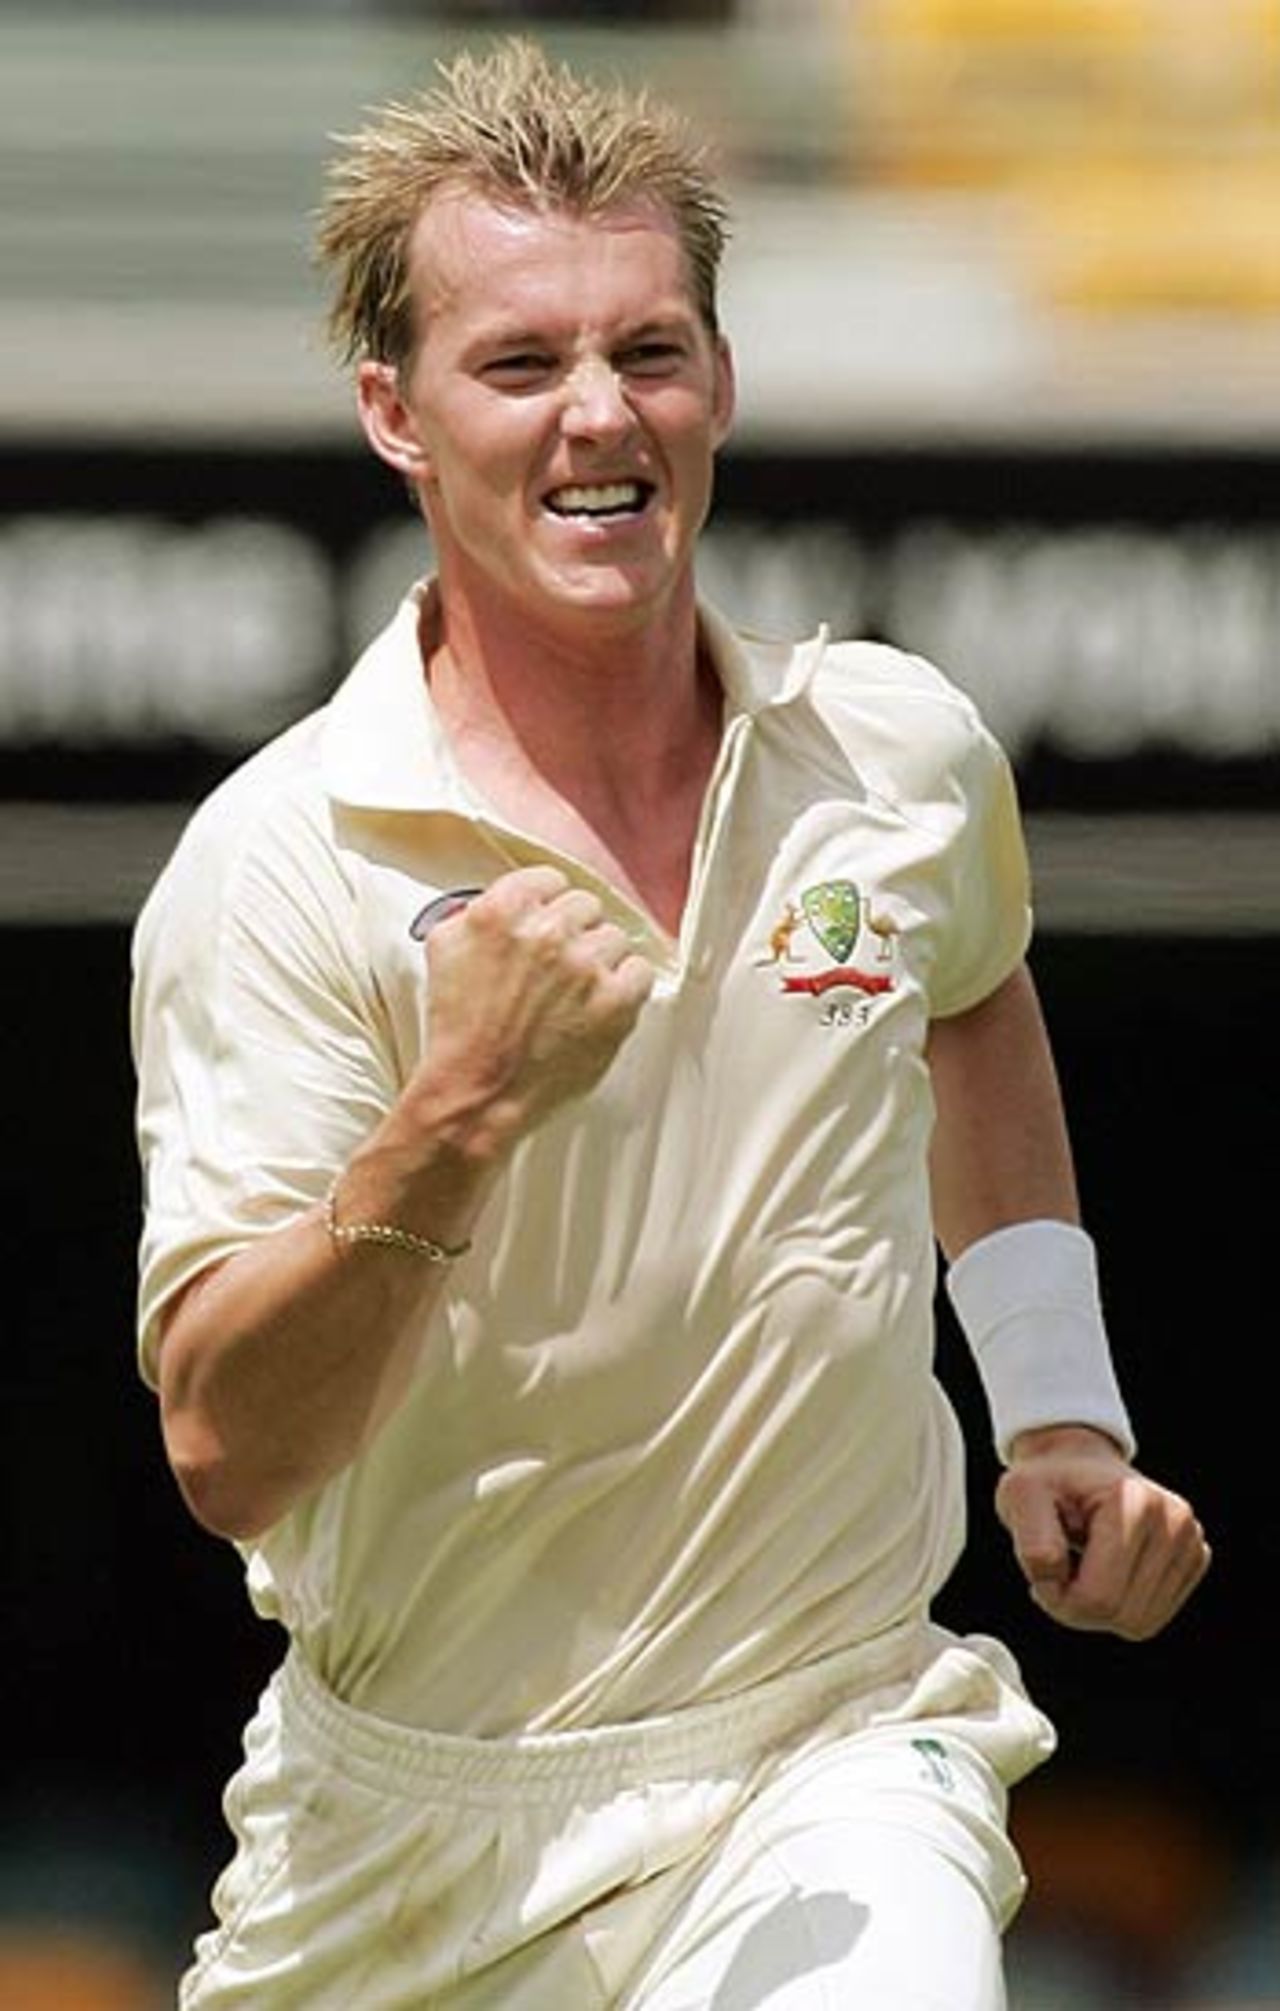 Brett Lee celebrates after dismissing Devon Smith, 1st Test, Brisbane, 4th day, November 5, 2005